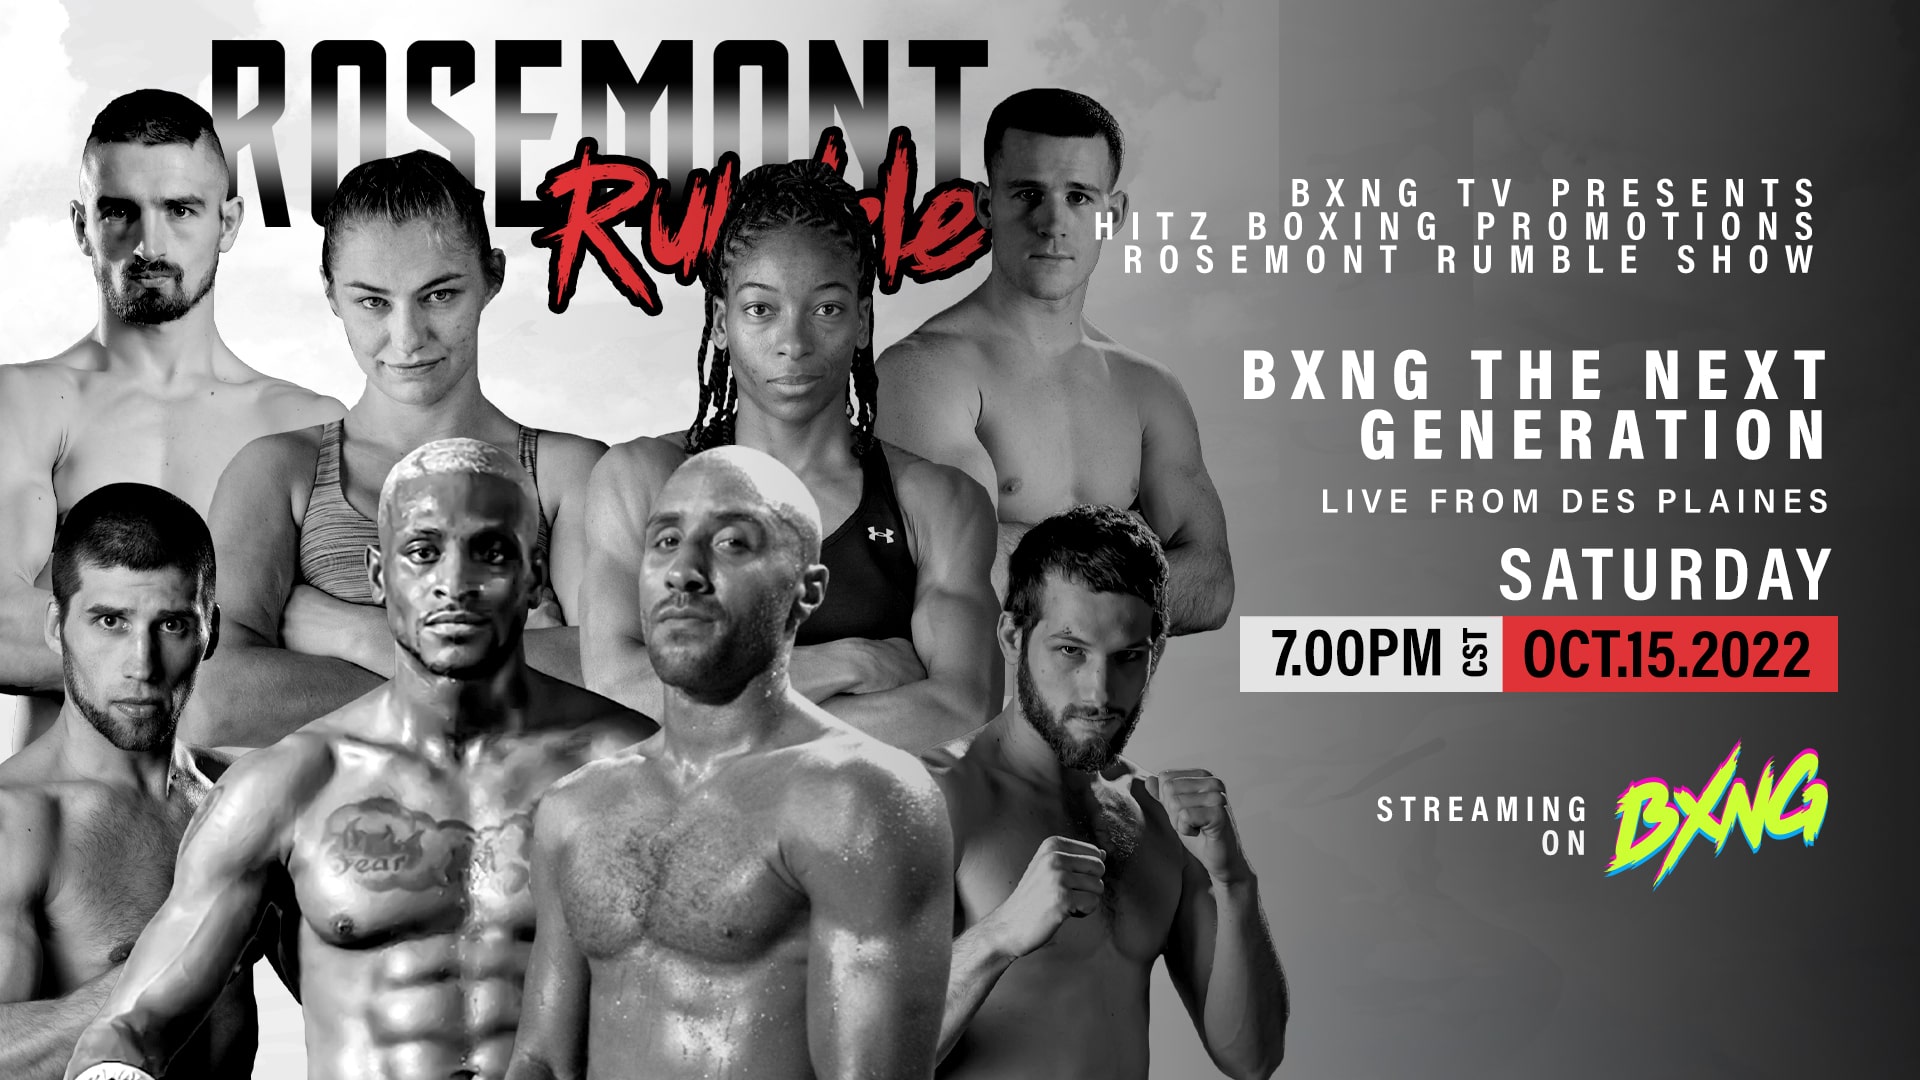 BXNG TV Presents HITZ Boxings Rosemont Rumble Show Live Stream 10/15/22